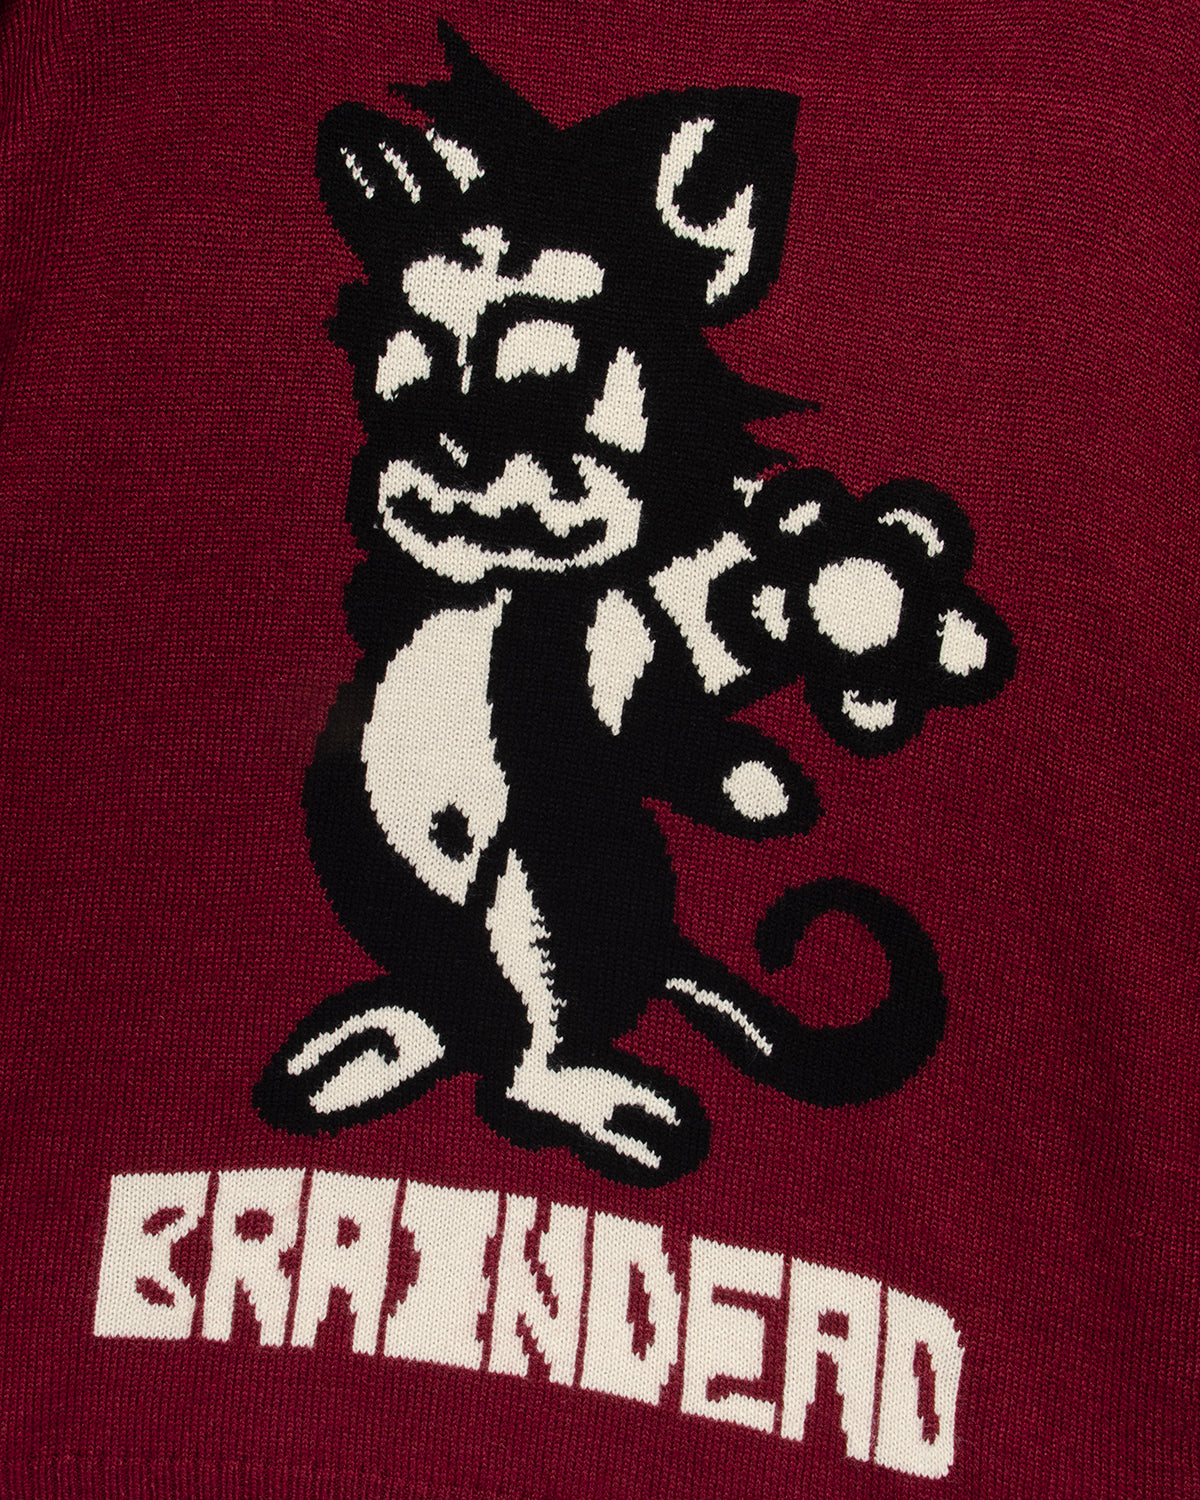 Meow Knit Sweater - Raspberry